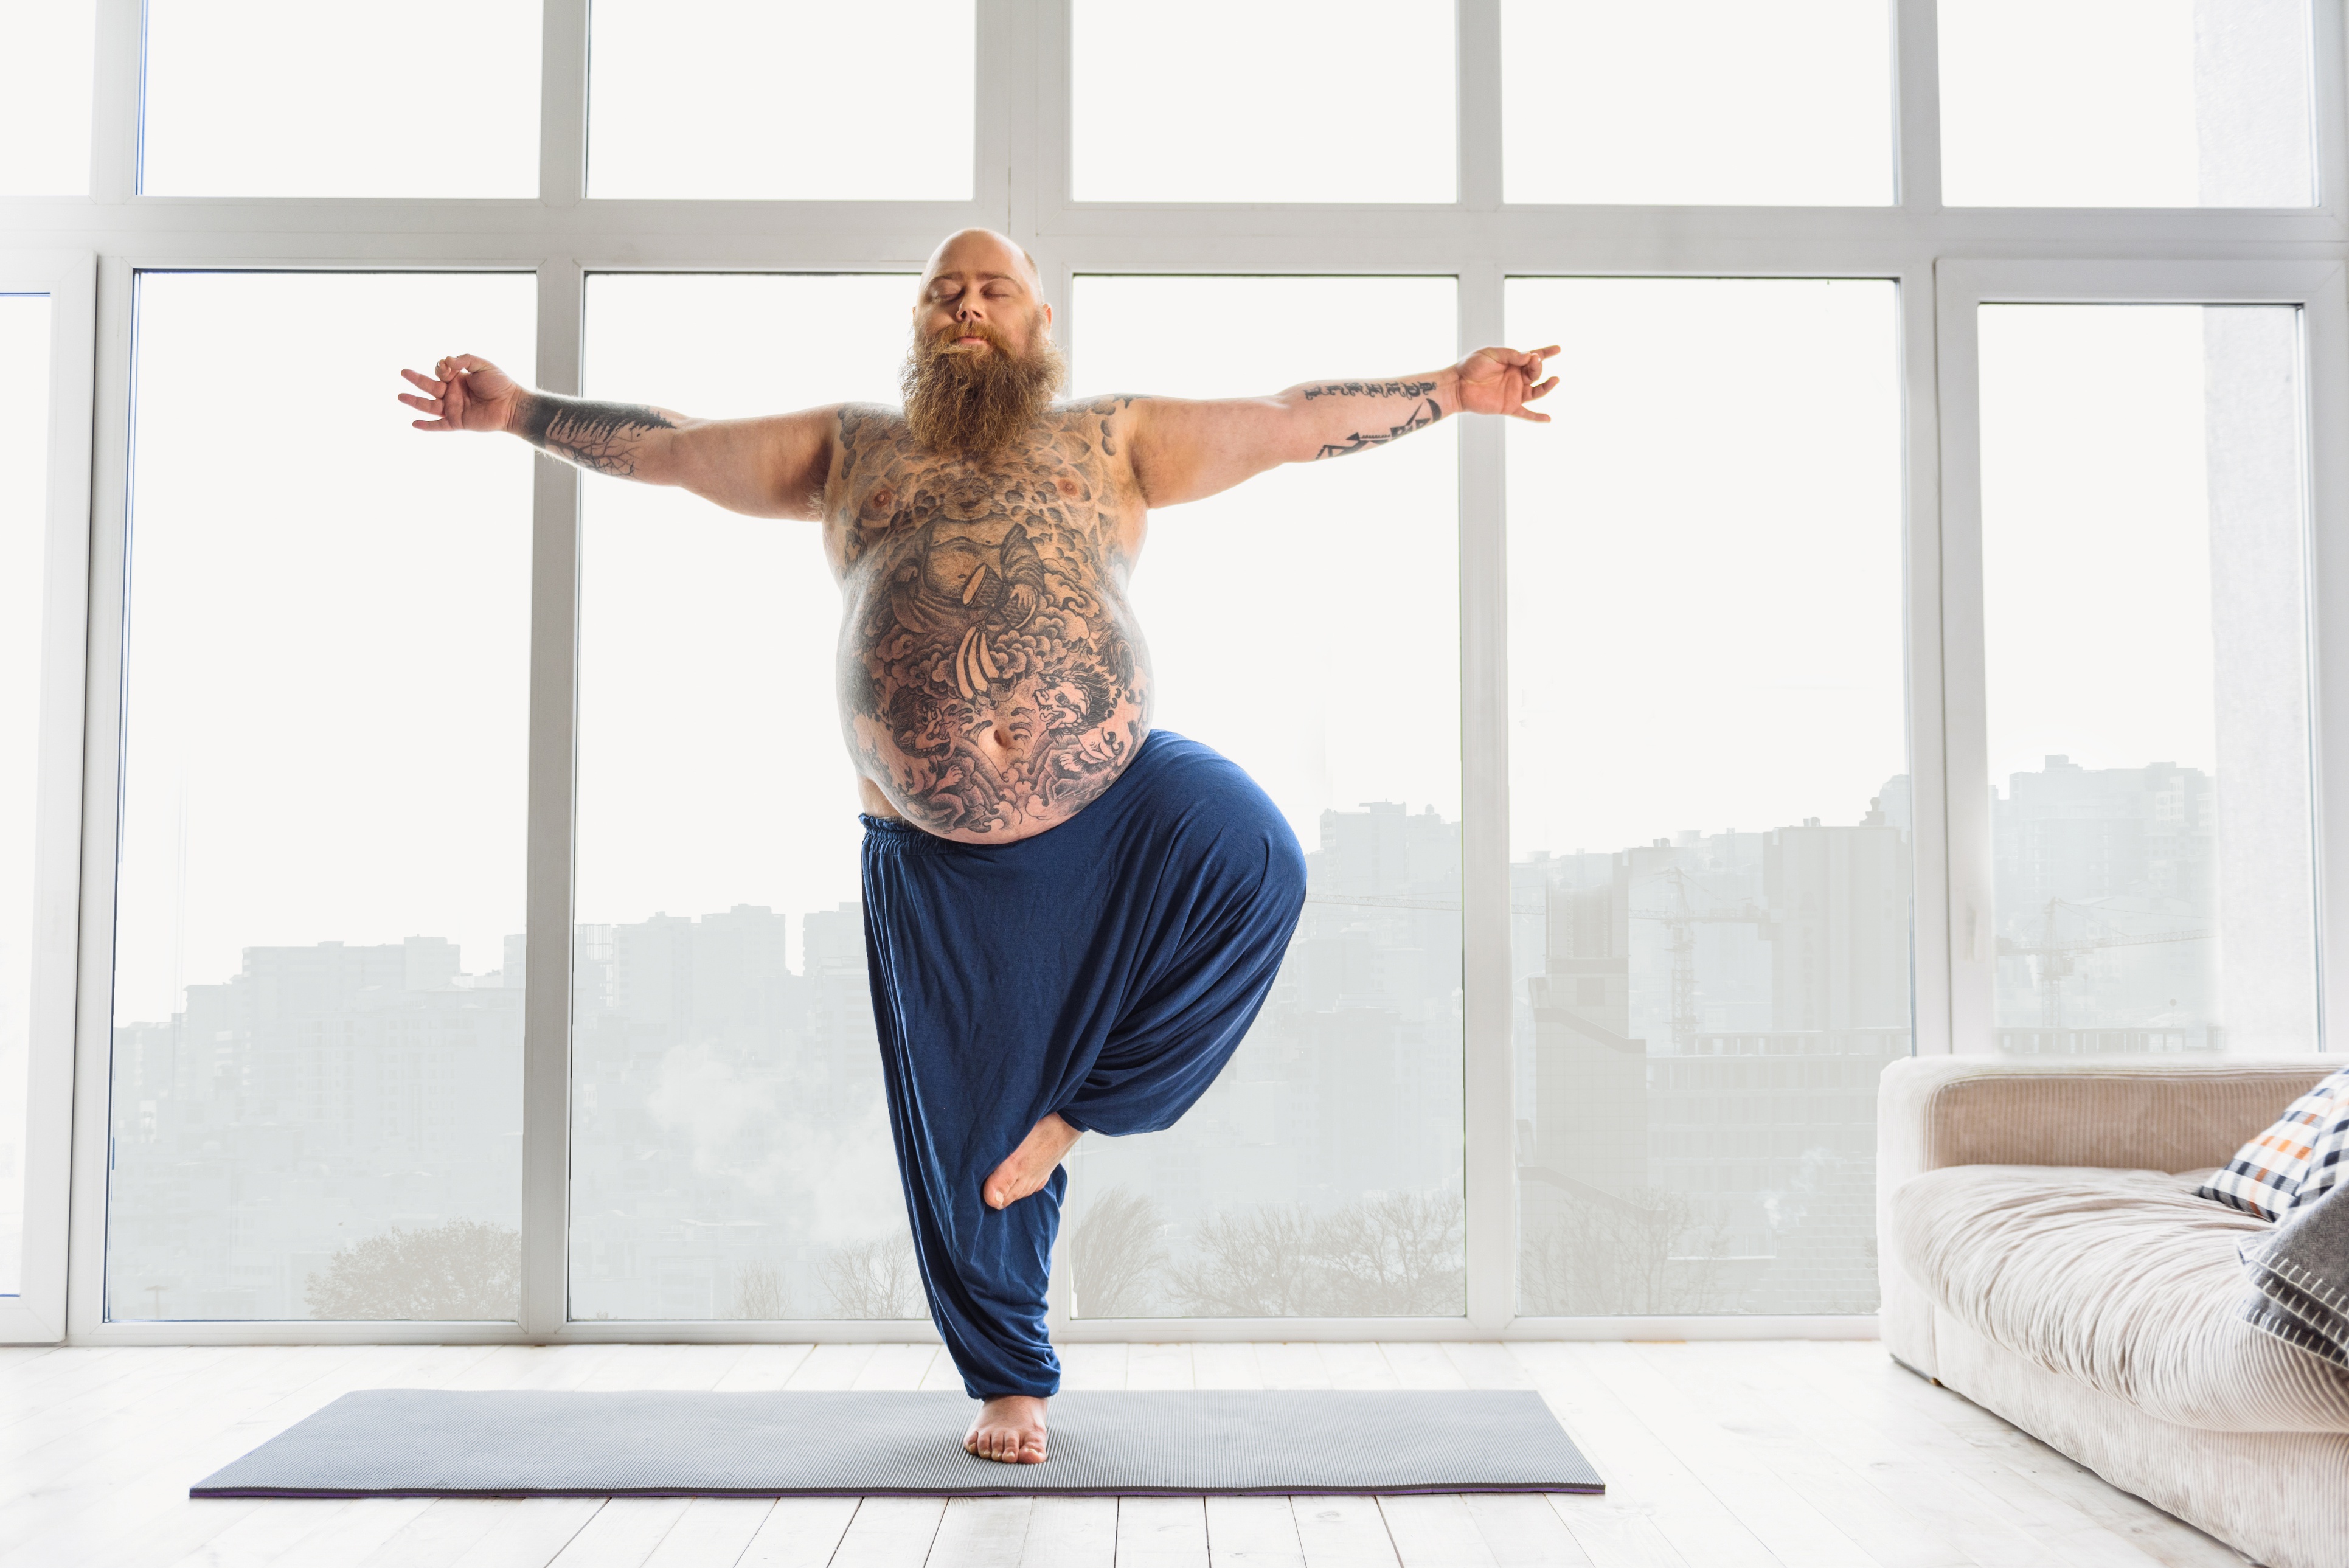 Barefoot Tattoo Beard Yoga Men Shirtless Yoga Mat Indoors Window Overweight Bald 3862x2578